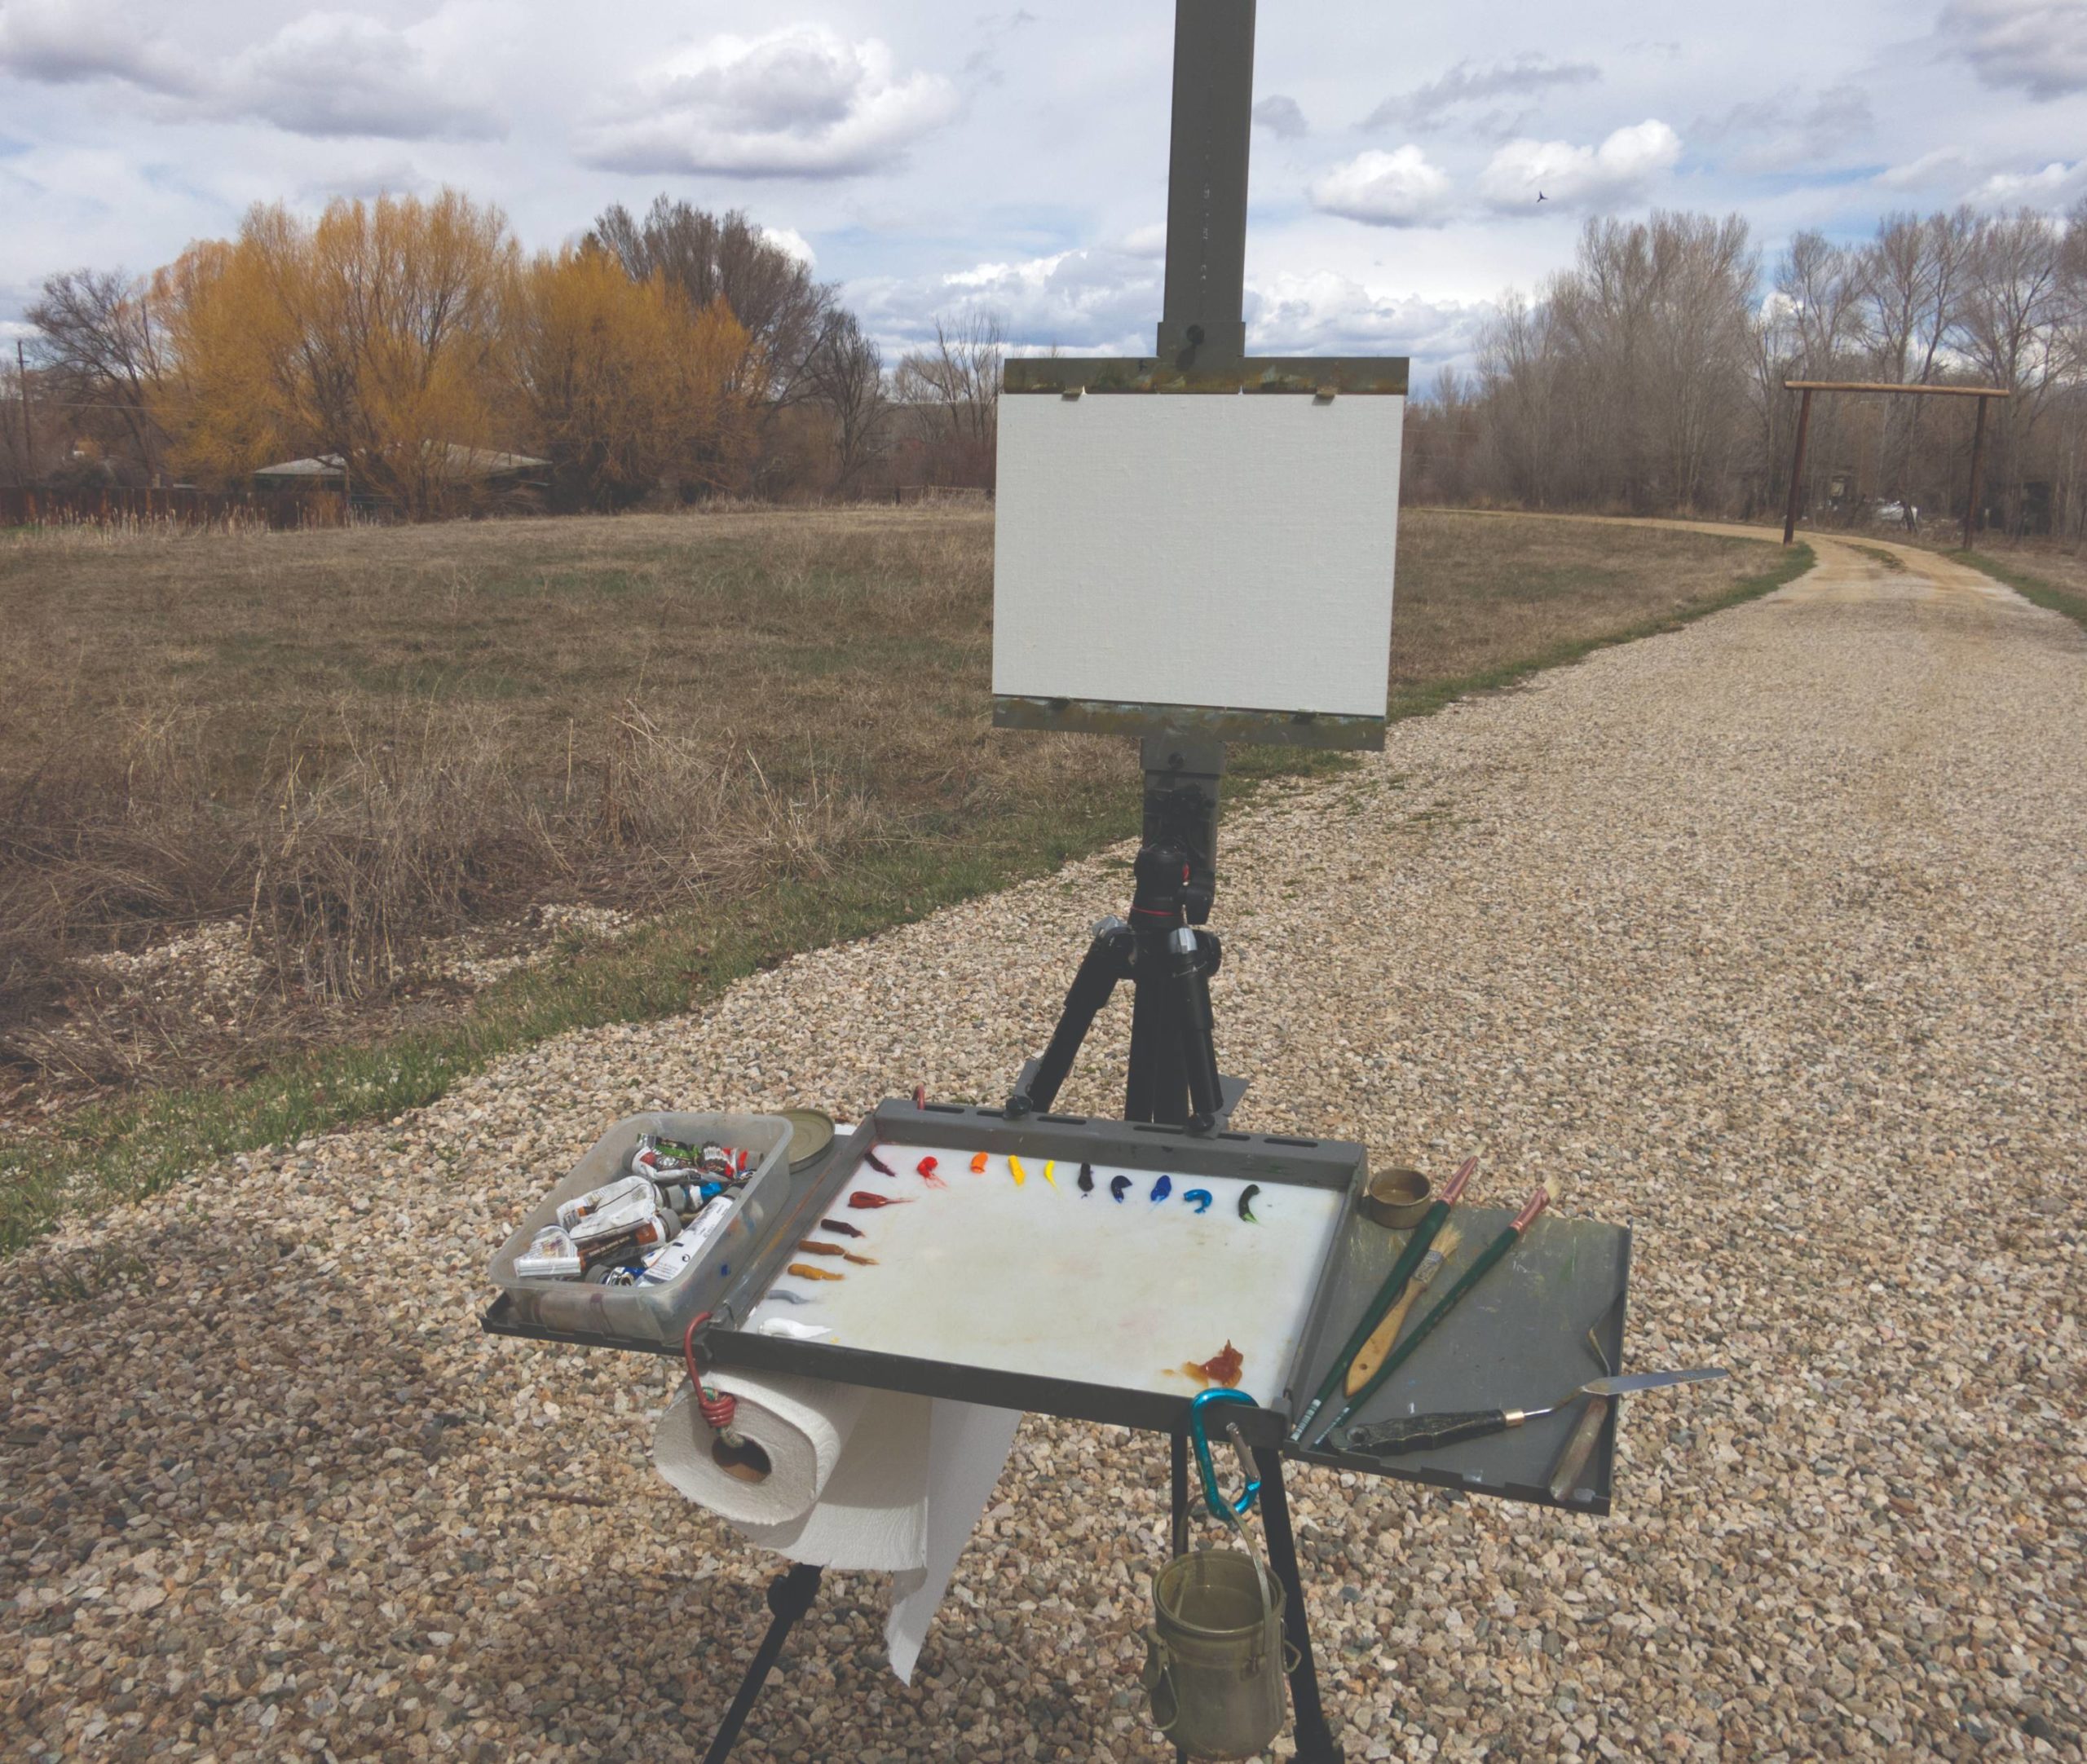 Landscape painting tutorial, step 1